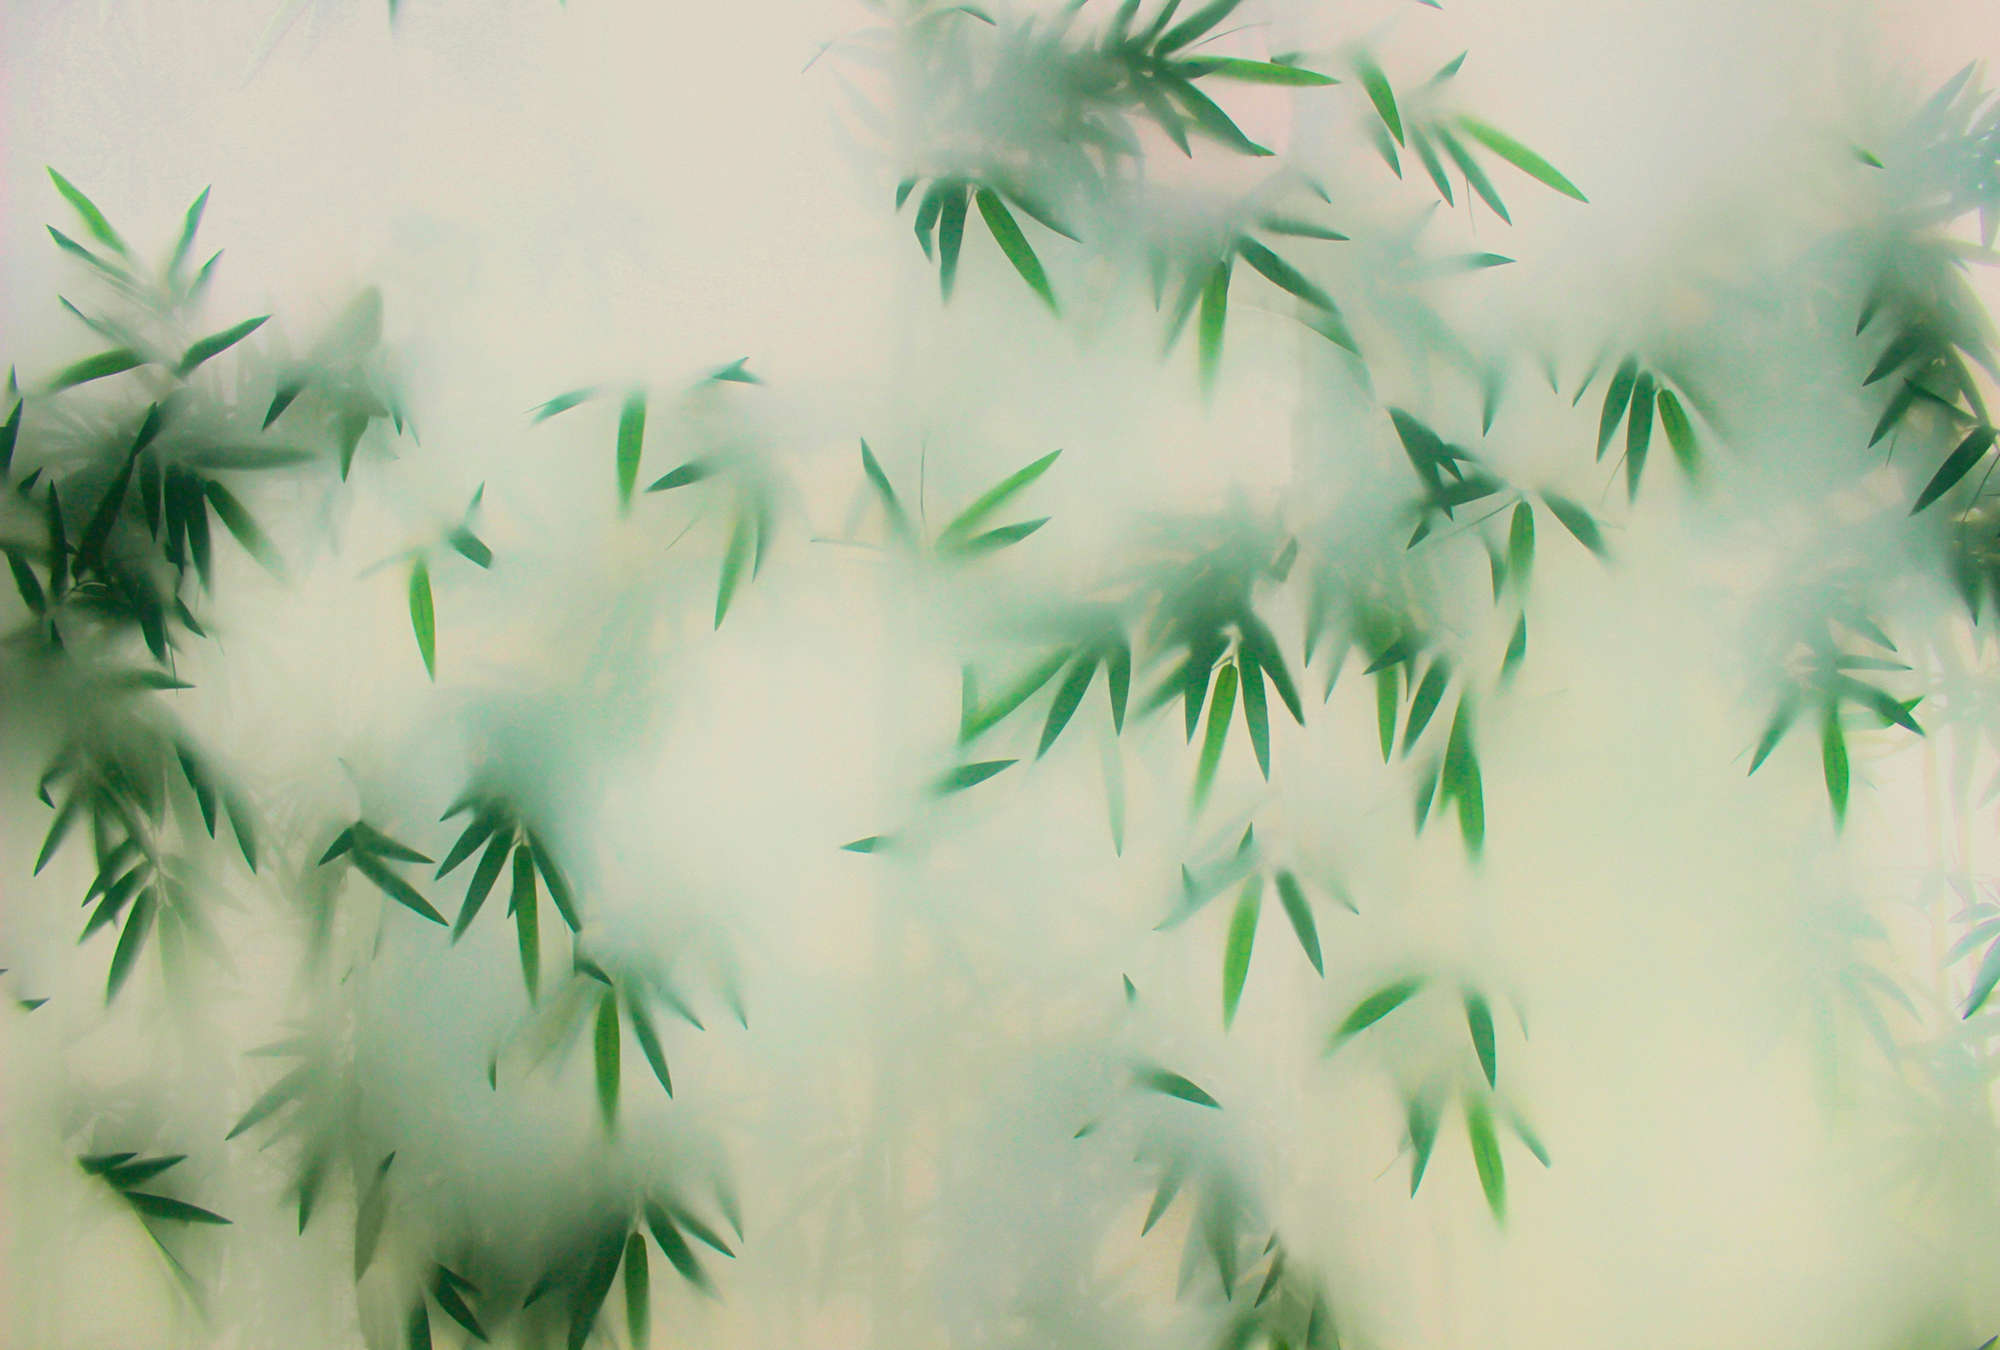             Panda Paradise 2 – Fototapete grüner Bambus im Nebel
        